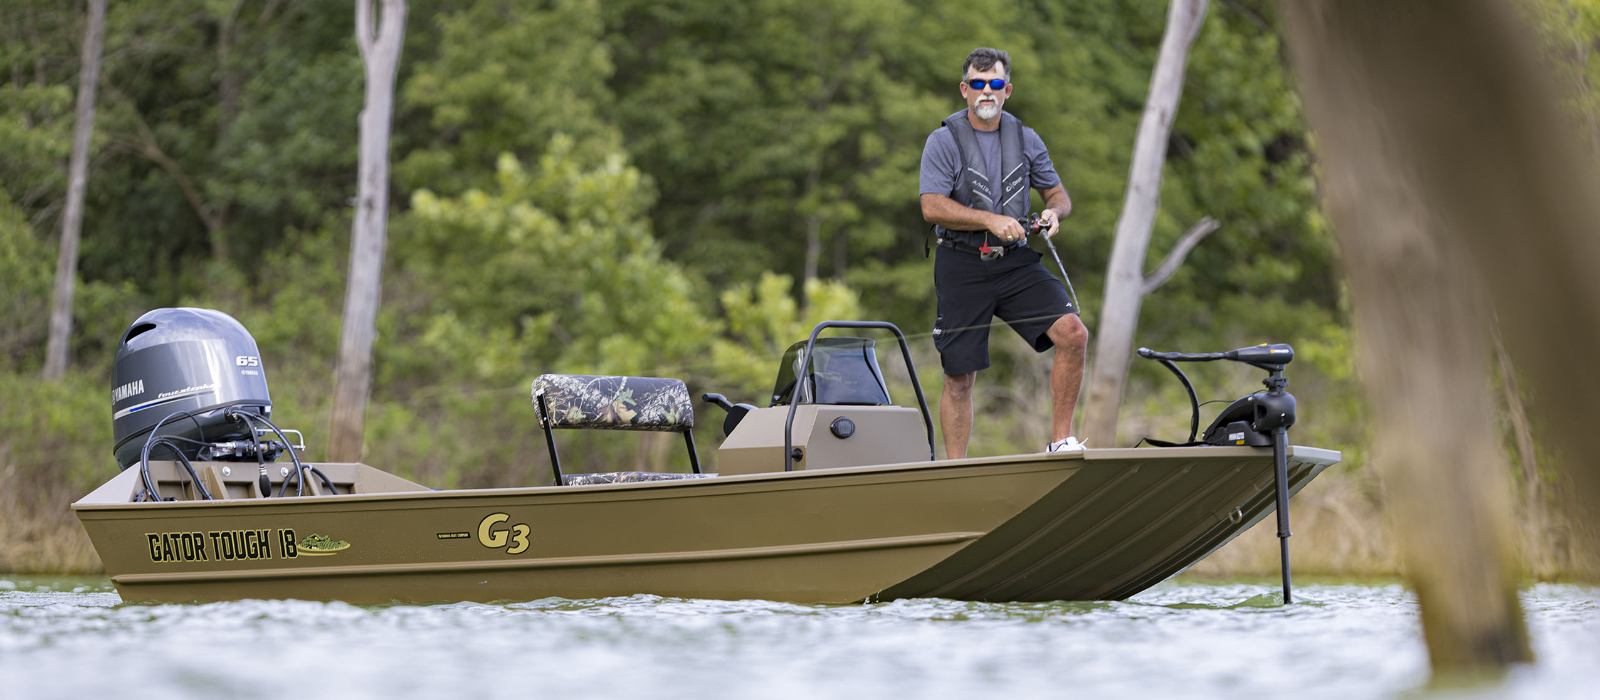 Gator Tough Jon Series - Compare Boat Models - G3 Boats